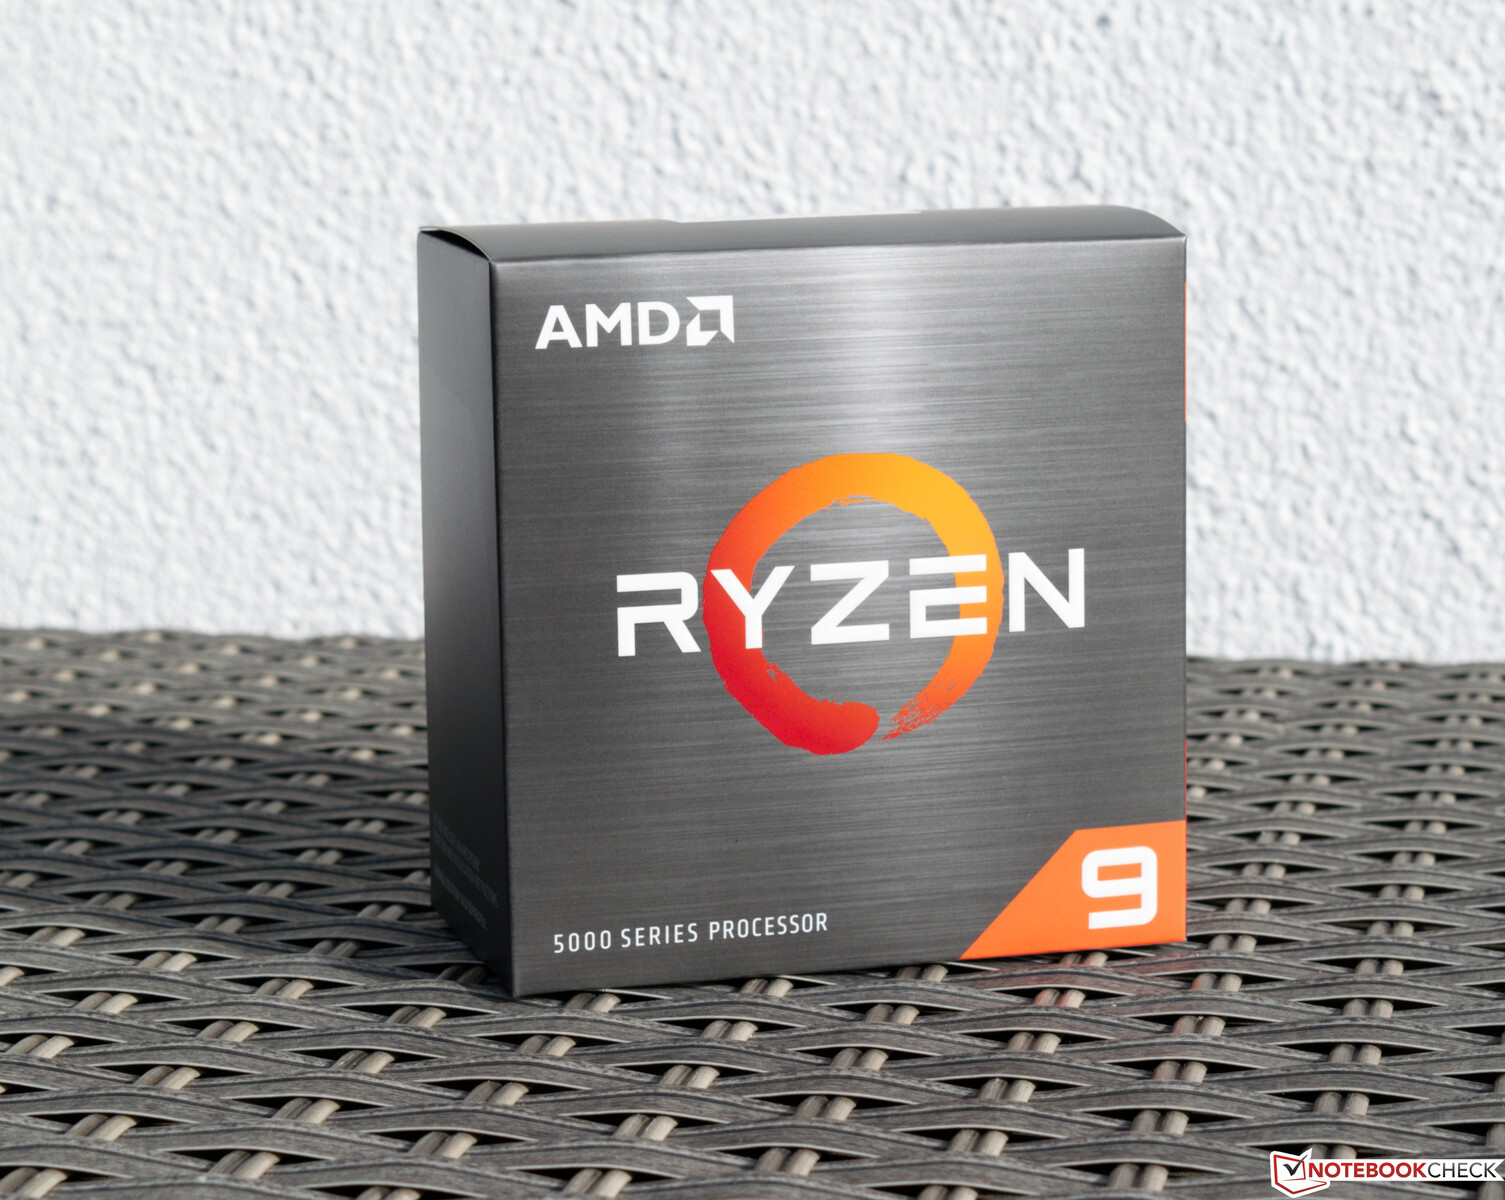 AMD Ryzen9 5900X